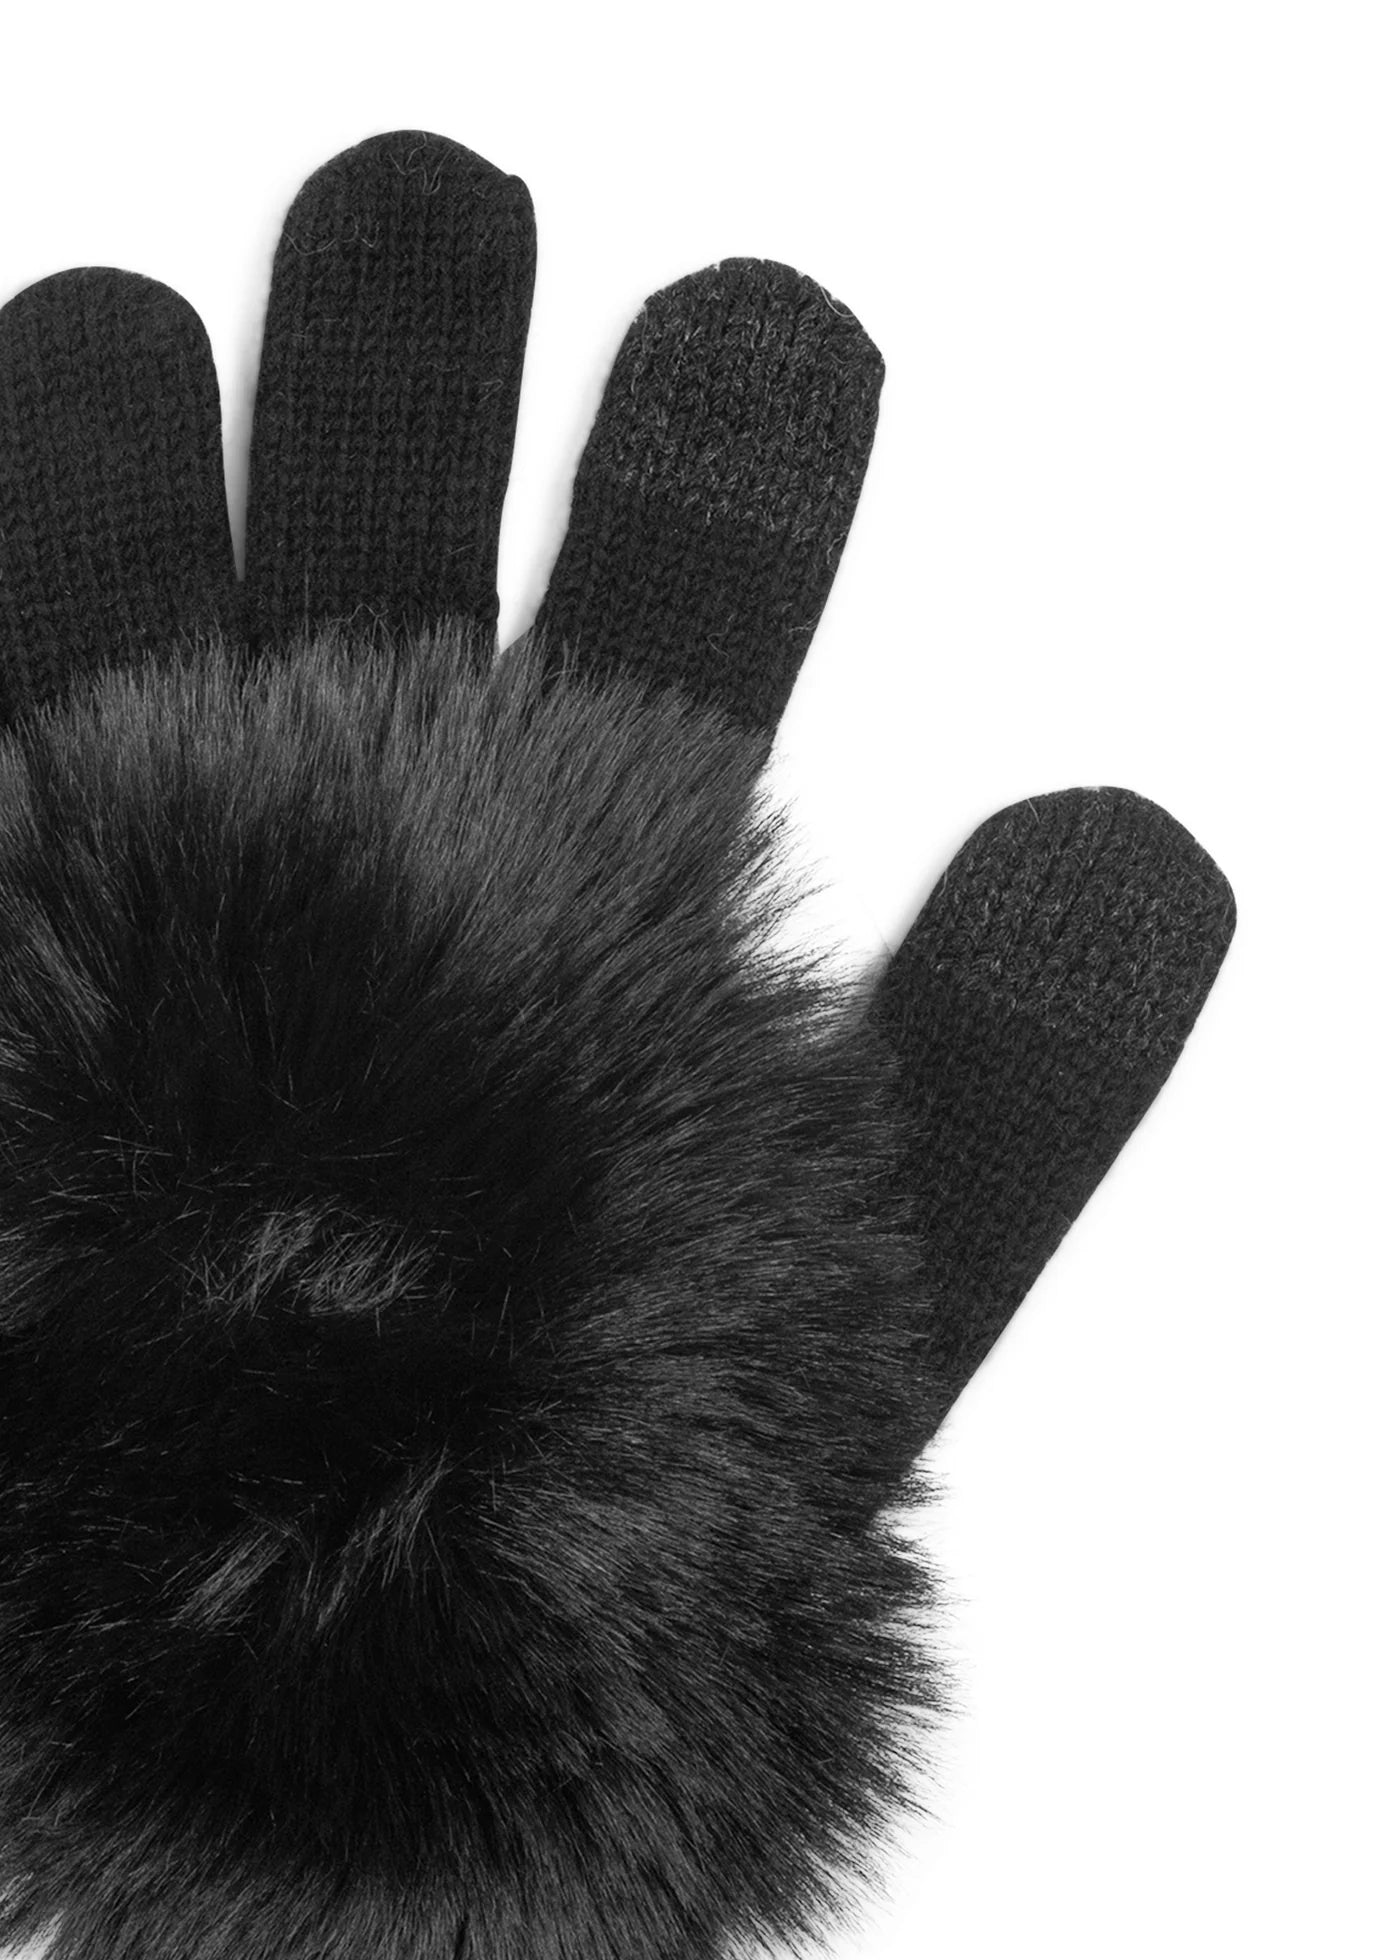 Haute Shore Chalet Fluff Touch Glove